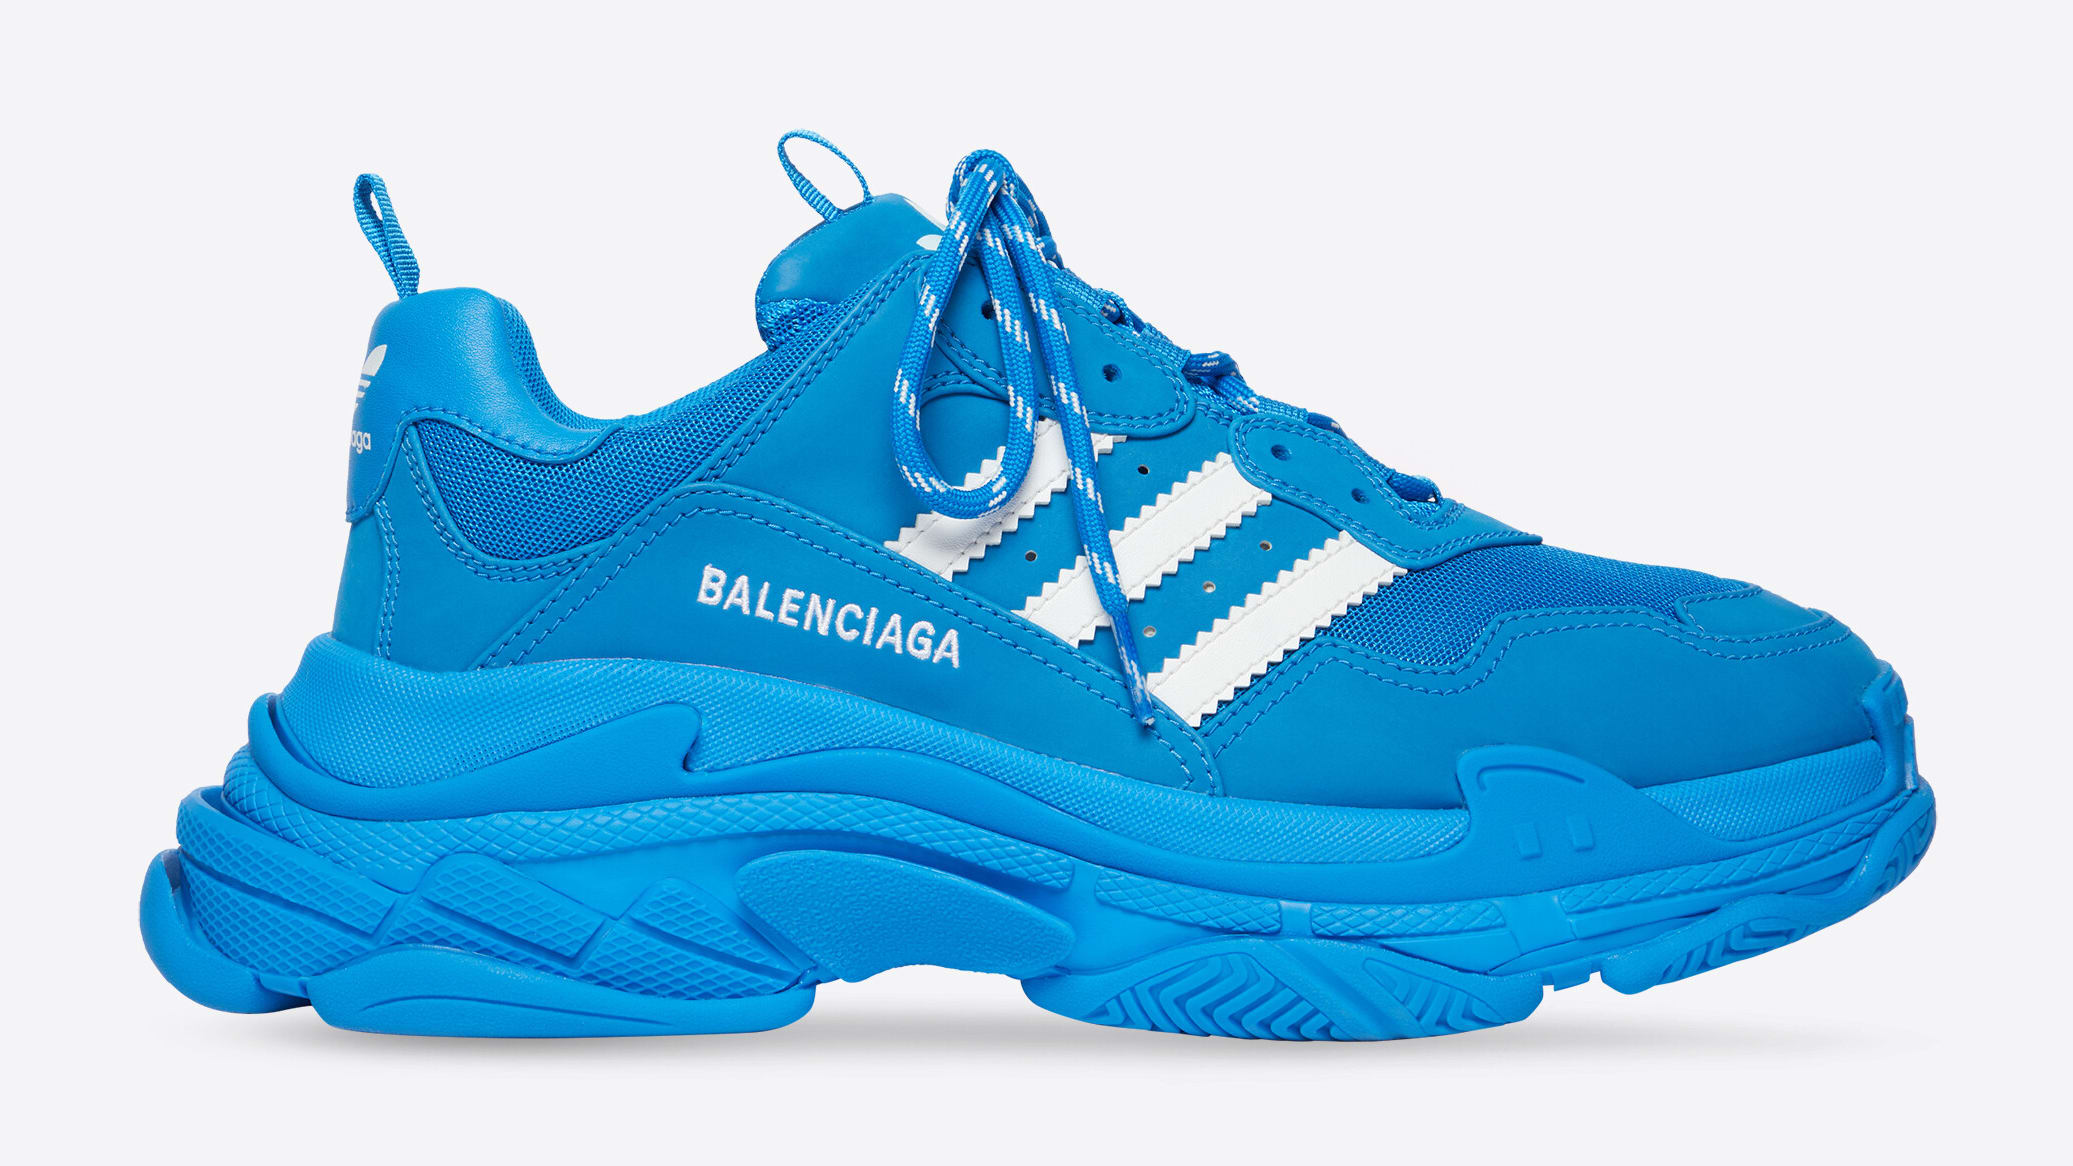 Balenciaga x Adidas the collaboration you didnt know you needed